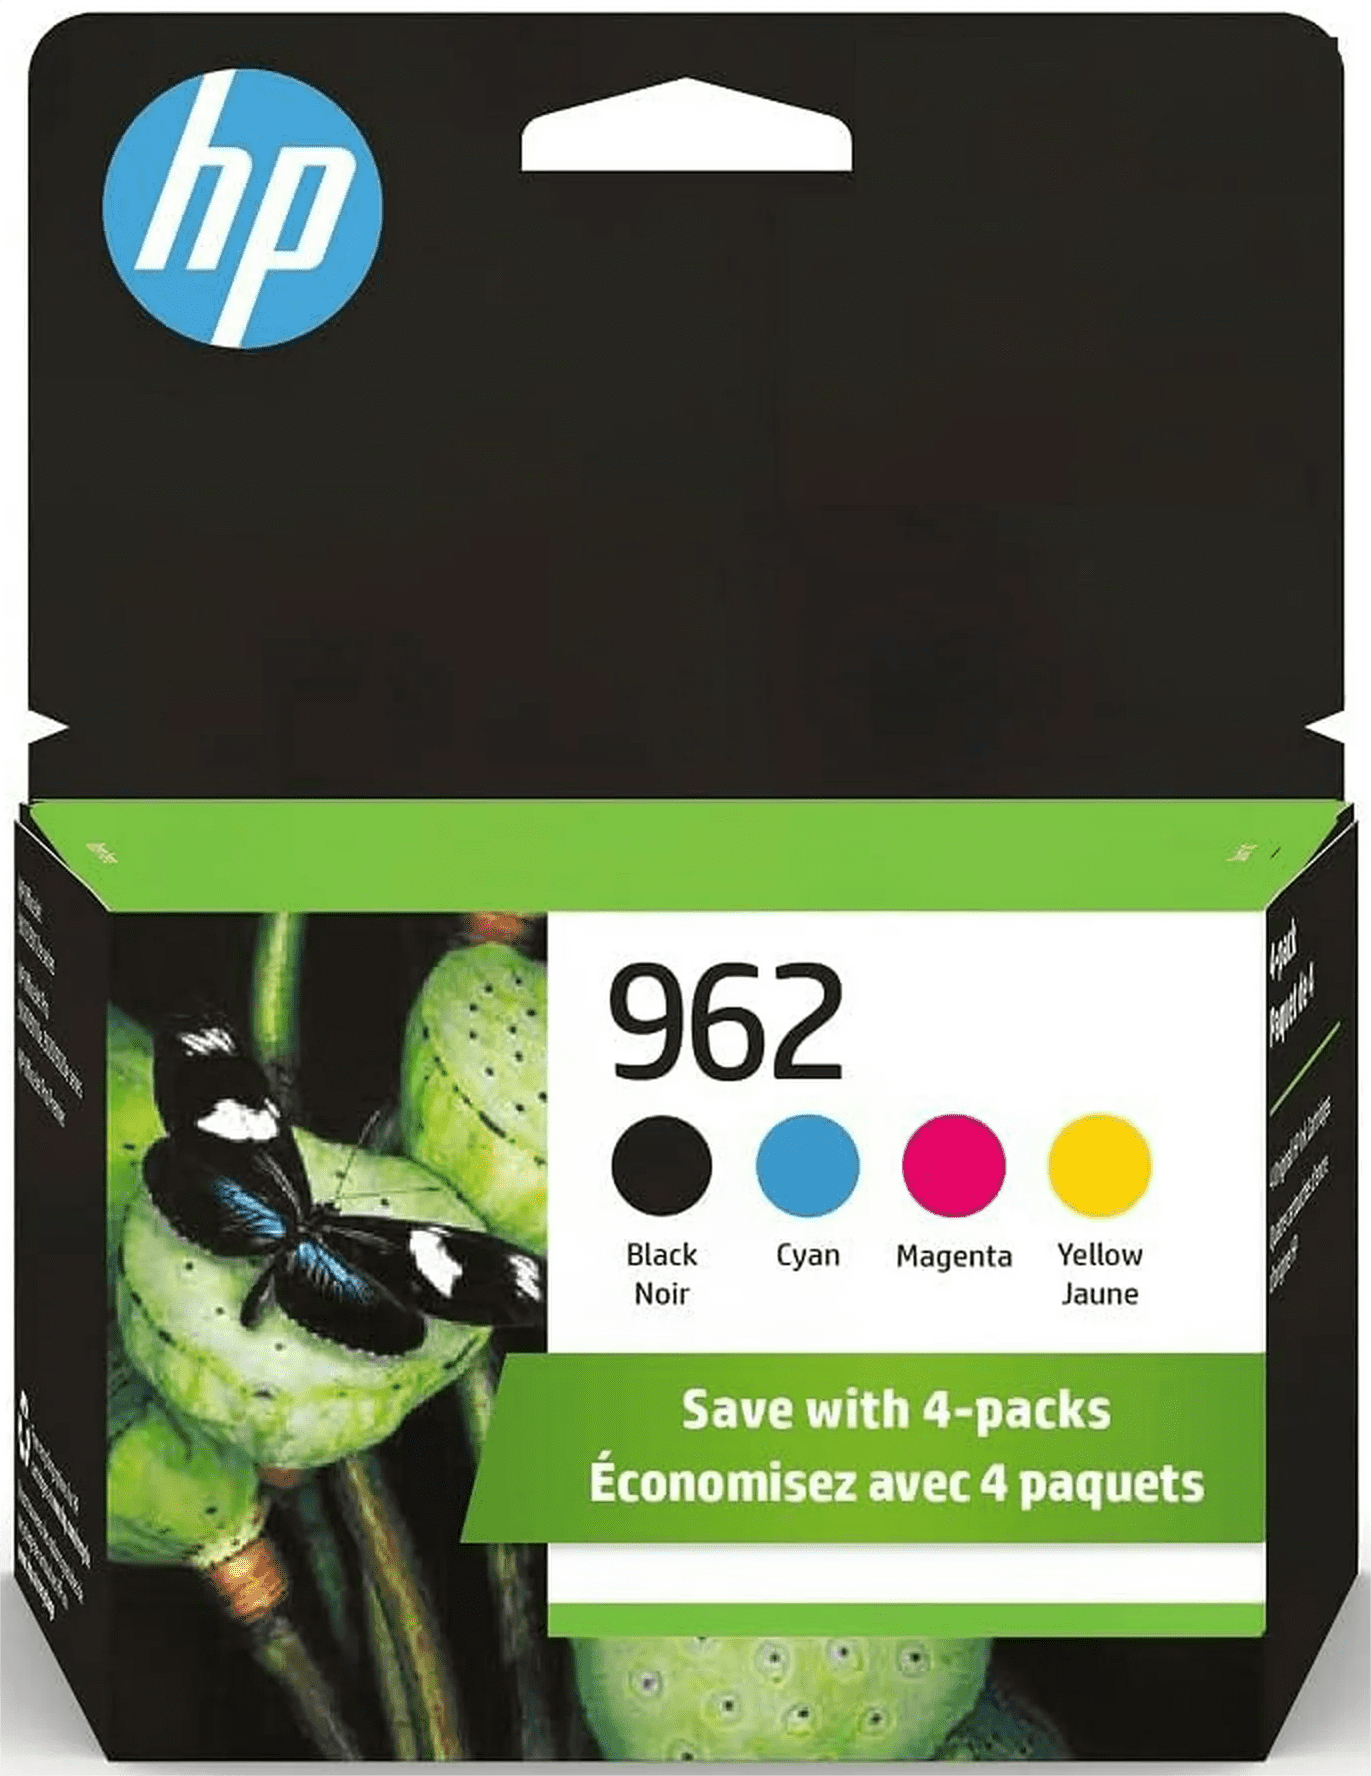 HP 364 4-PACK BLACK/CYAN/MAGEN